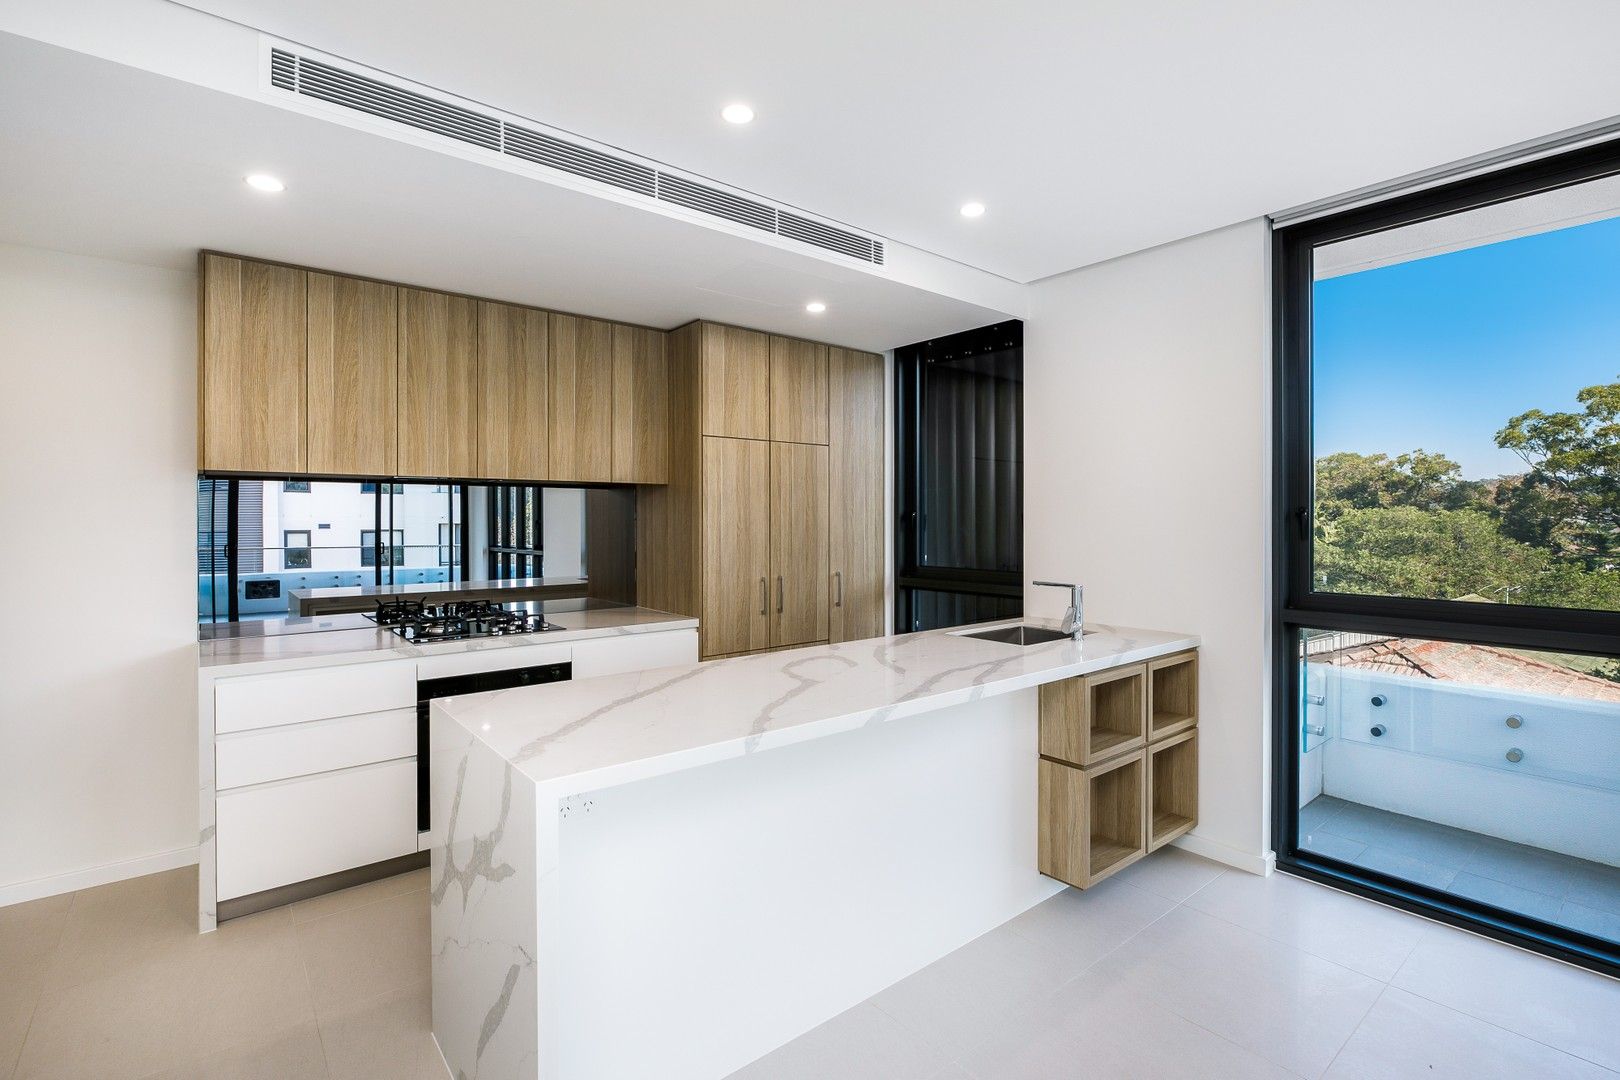 2 bedrooms Apartment / Unit / Flat in 303/38 Pinnacle Street MIRANDA NSW, 2228